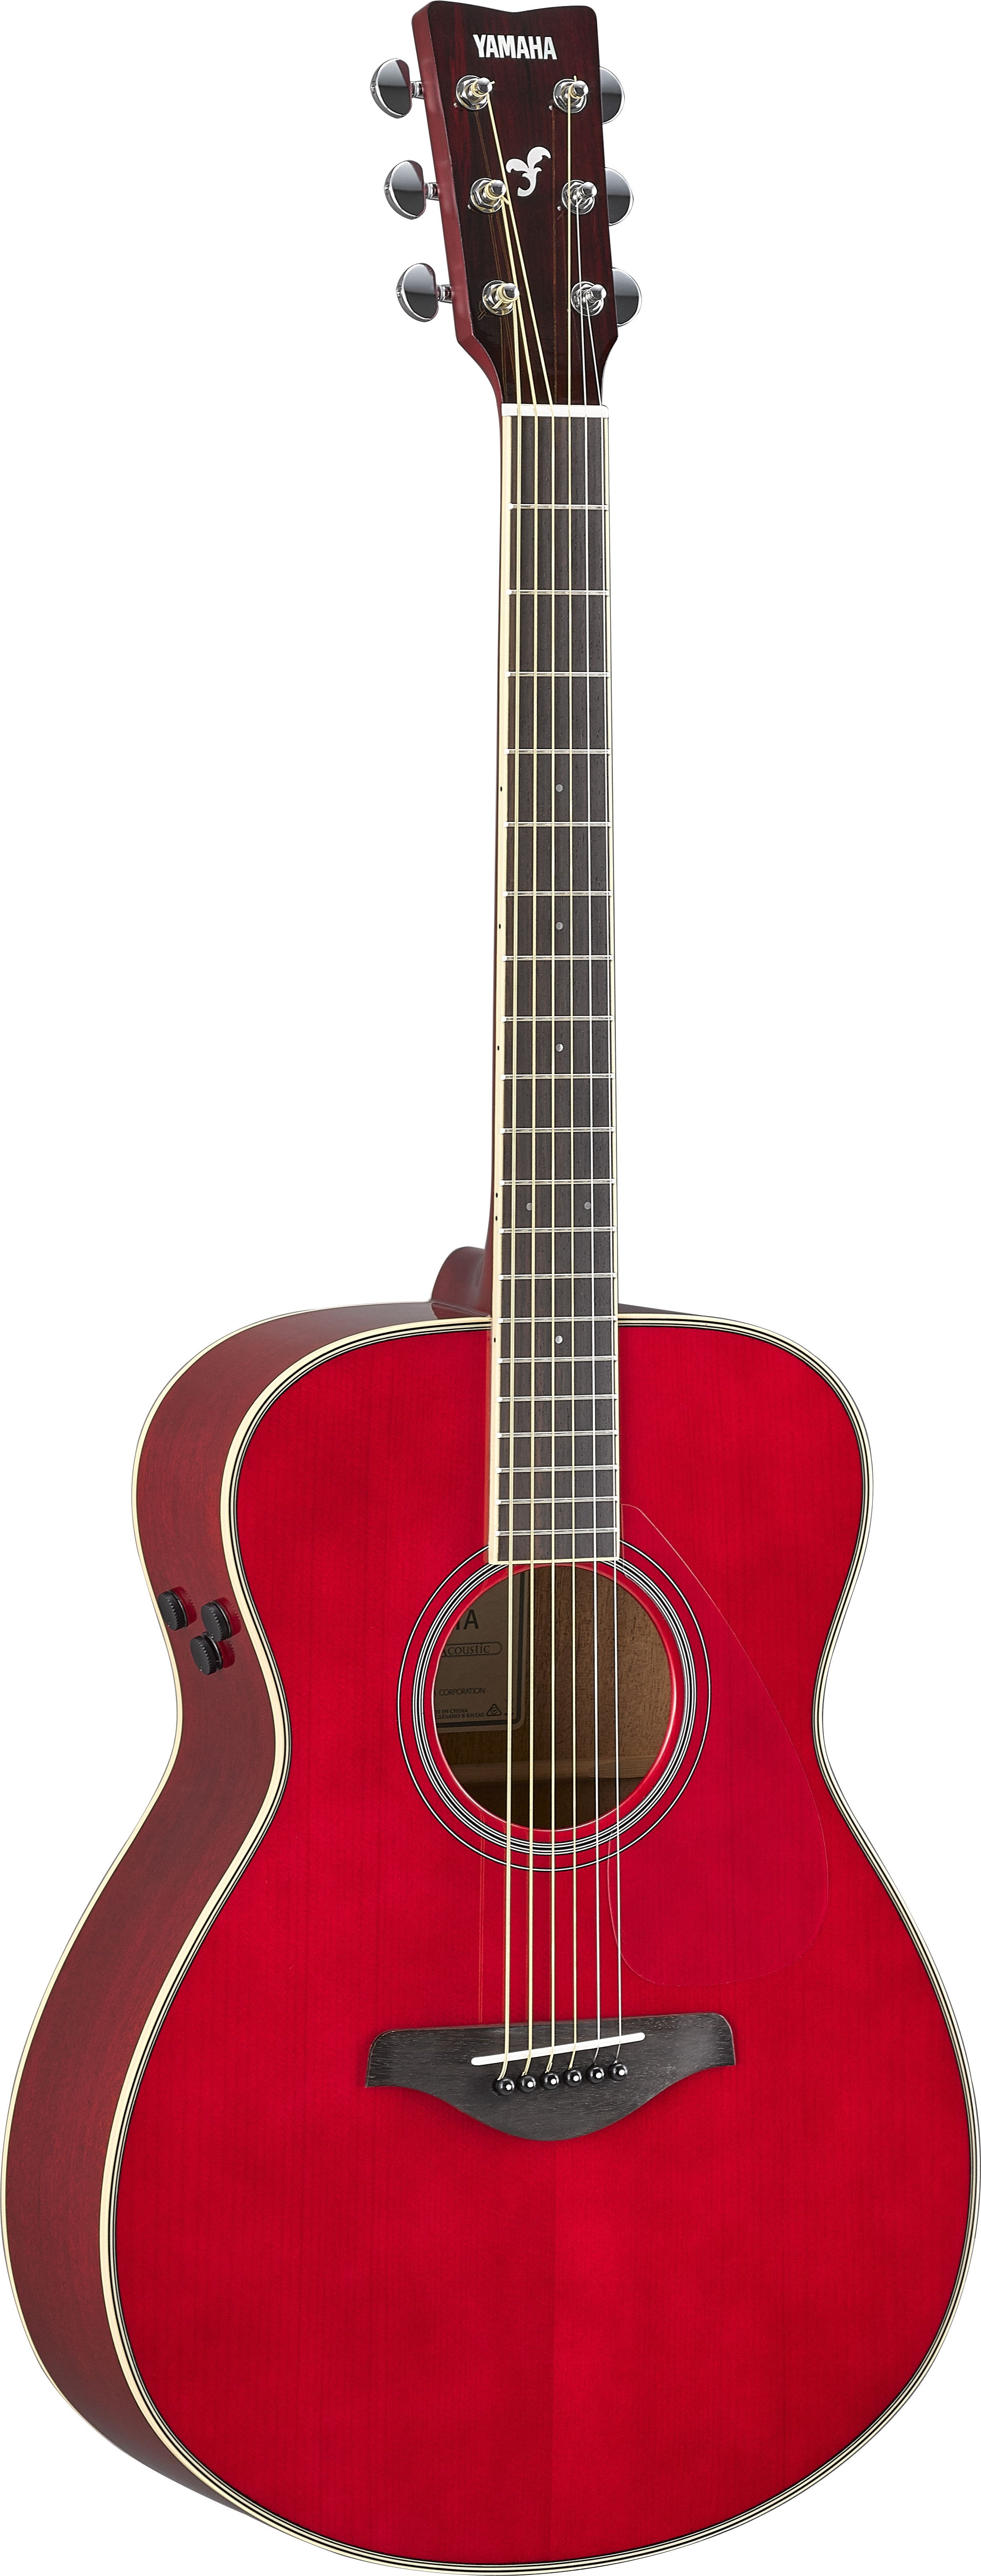 Yamaha Transacoustic Guitar - Ruby Red 木結他